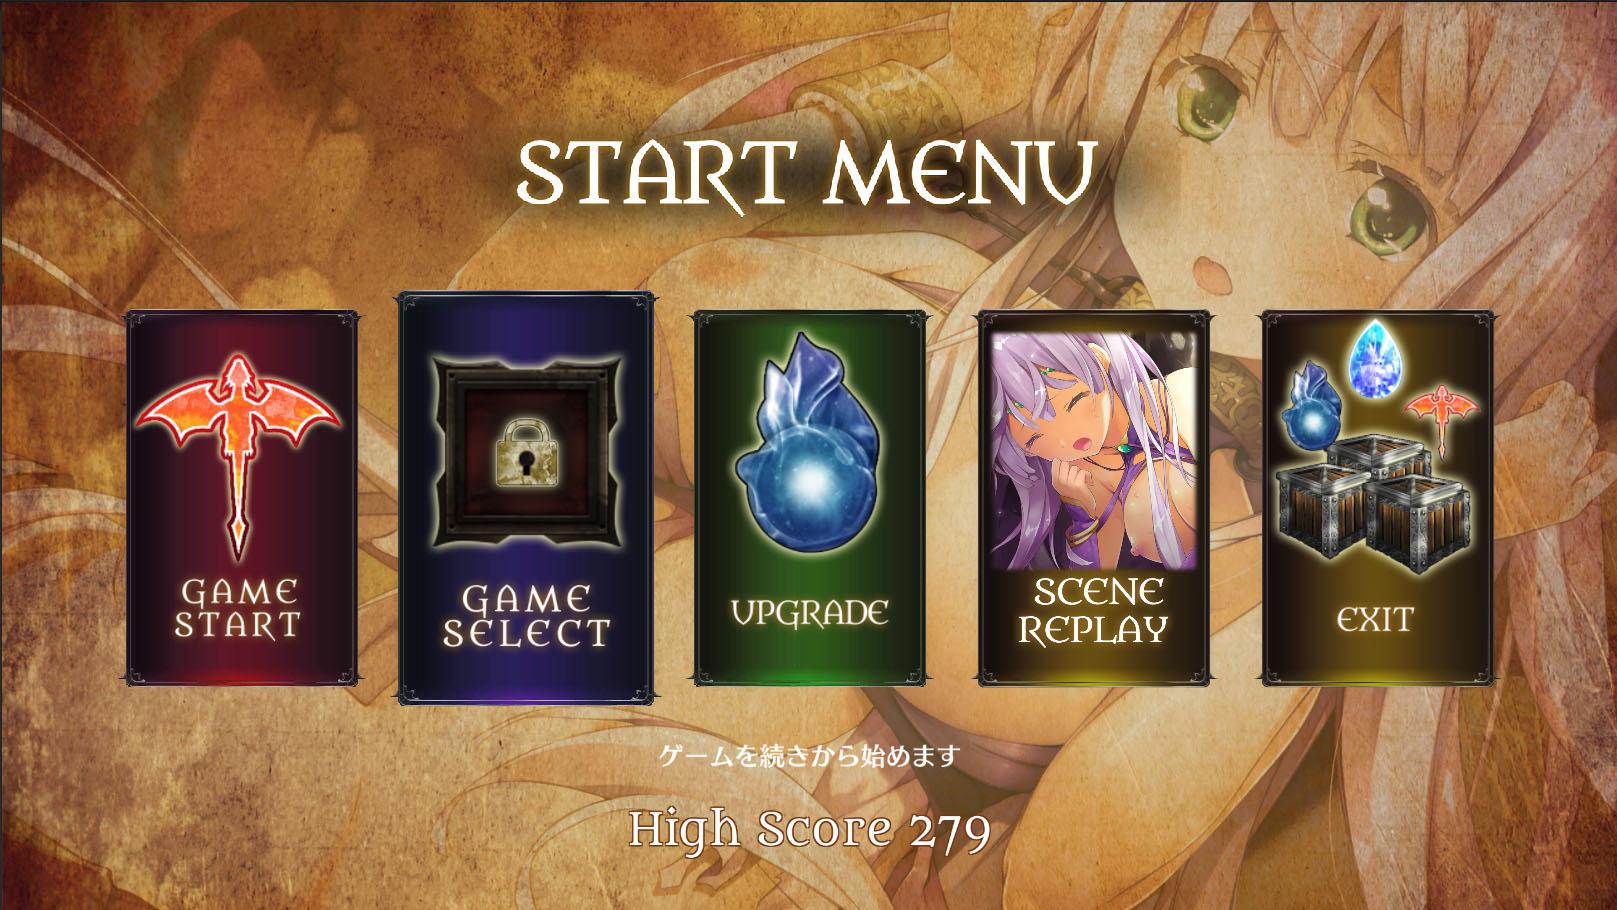 Screenshot №6 from game Dragonia